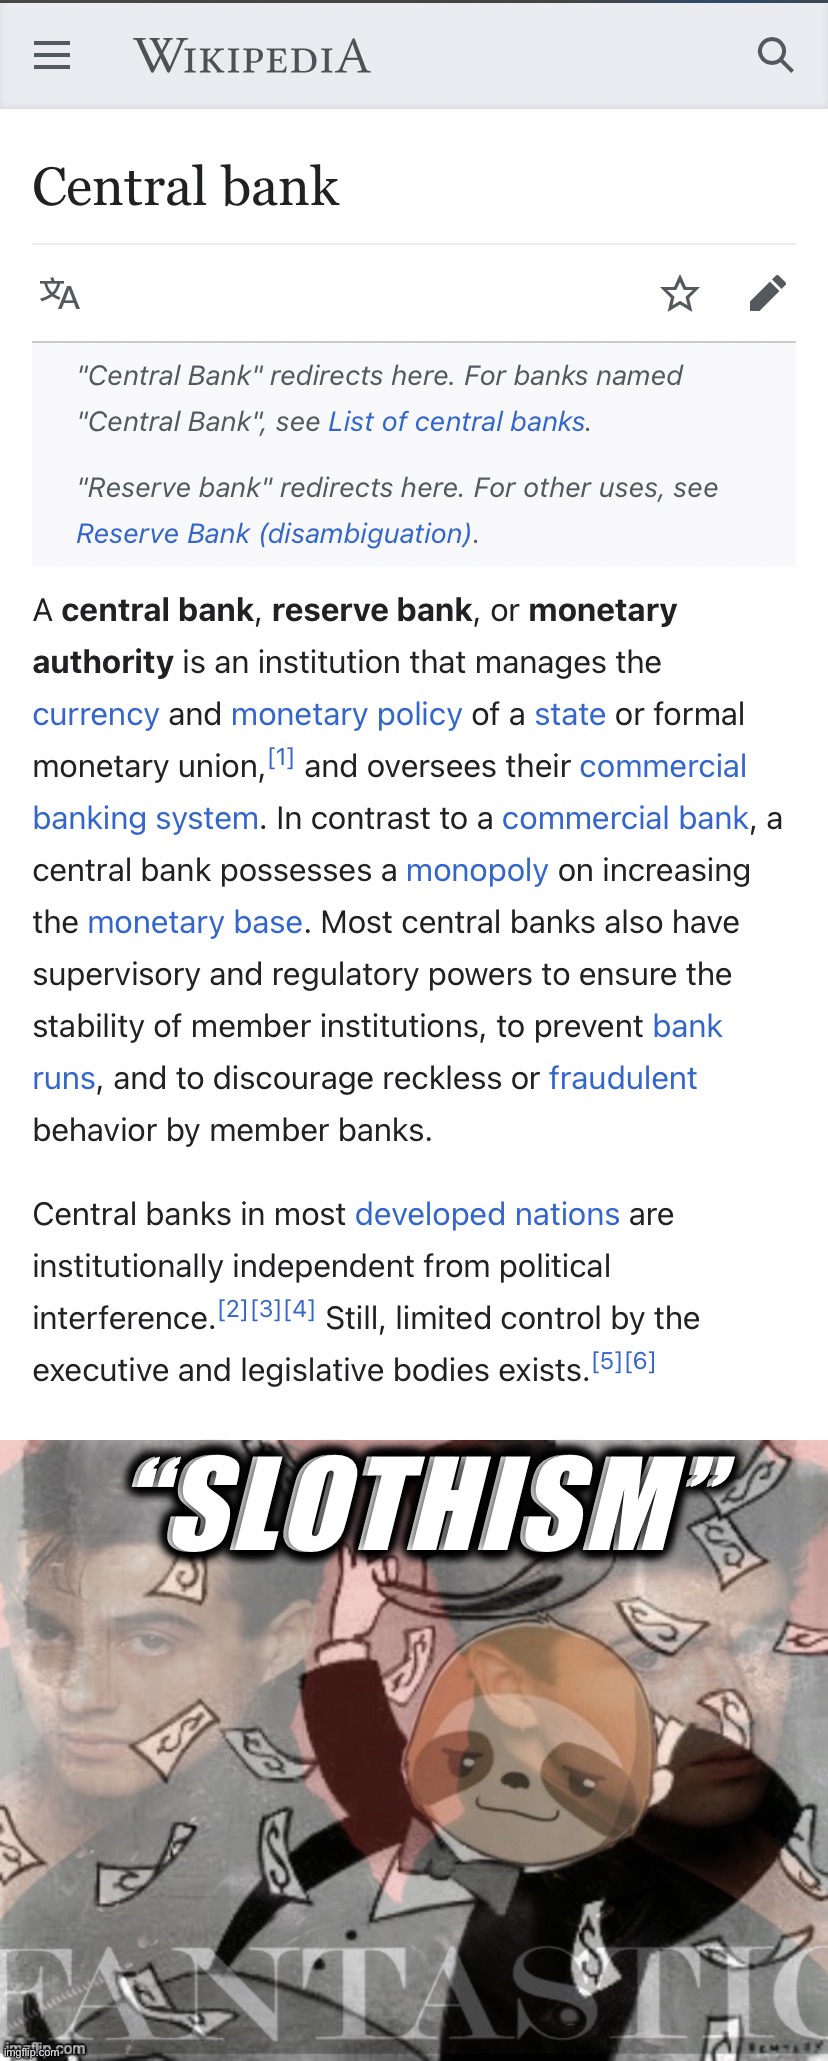 “SLOTHISM” | image tagged in central bank wikipedia definition,sloth banker fantastic | made w/ Imgflip meme maker